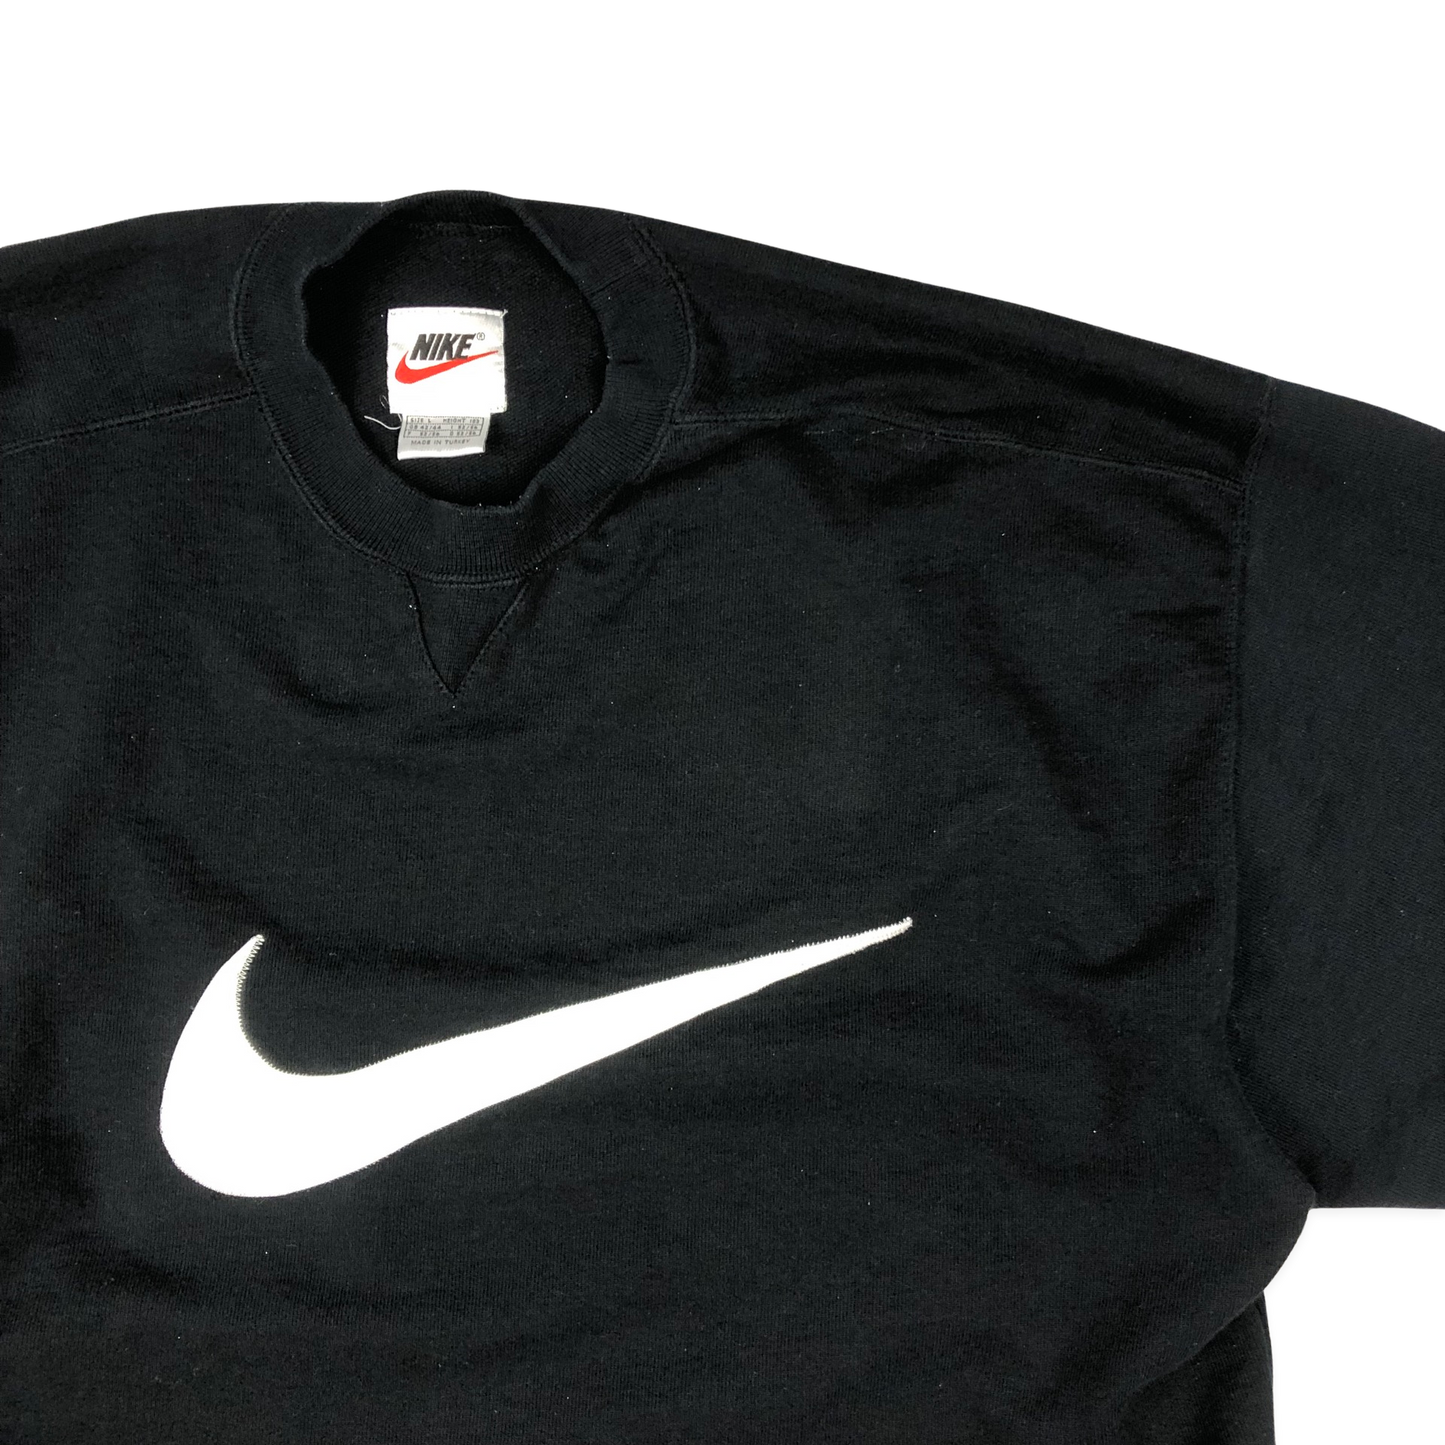 Vintage 90s Nike Black Swoosh Sweatshirt